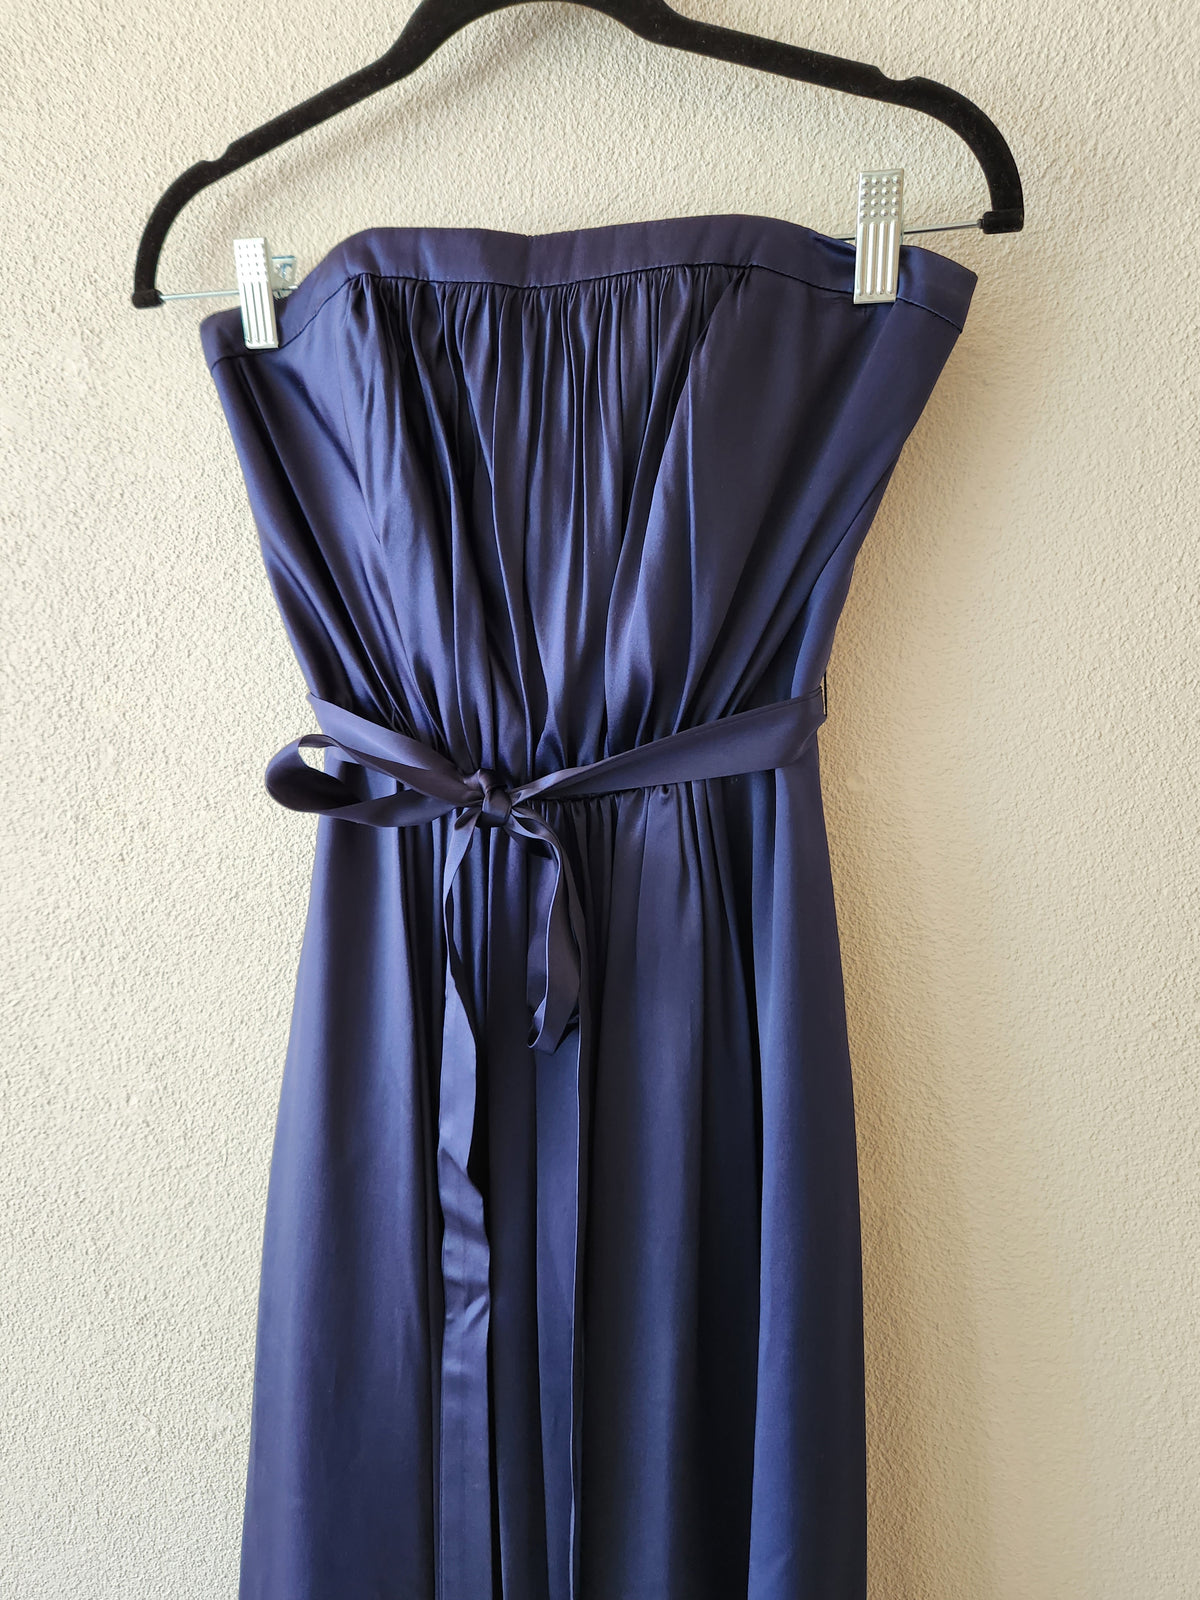 Melissa sweet Navy blue strapless gown 2